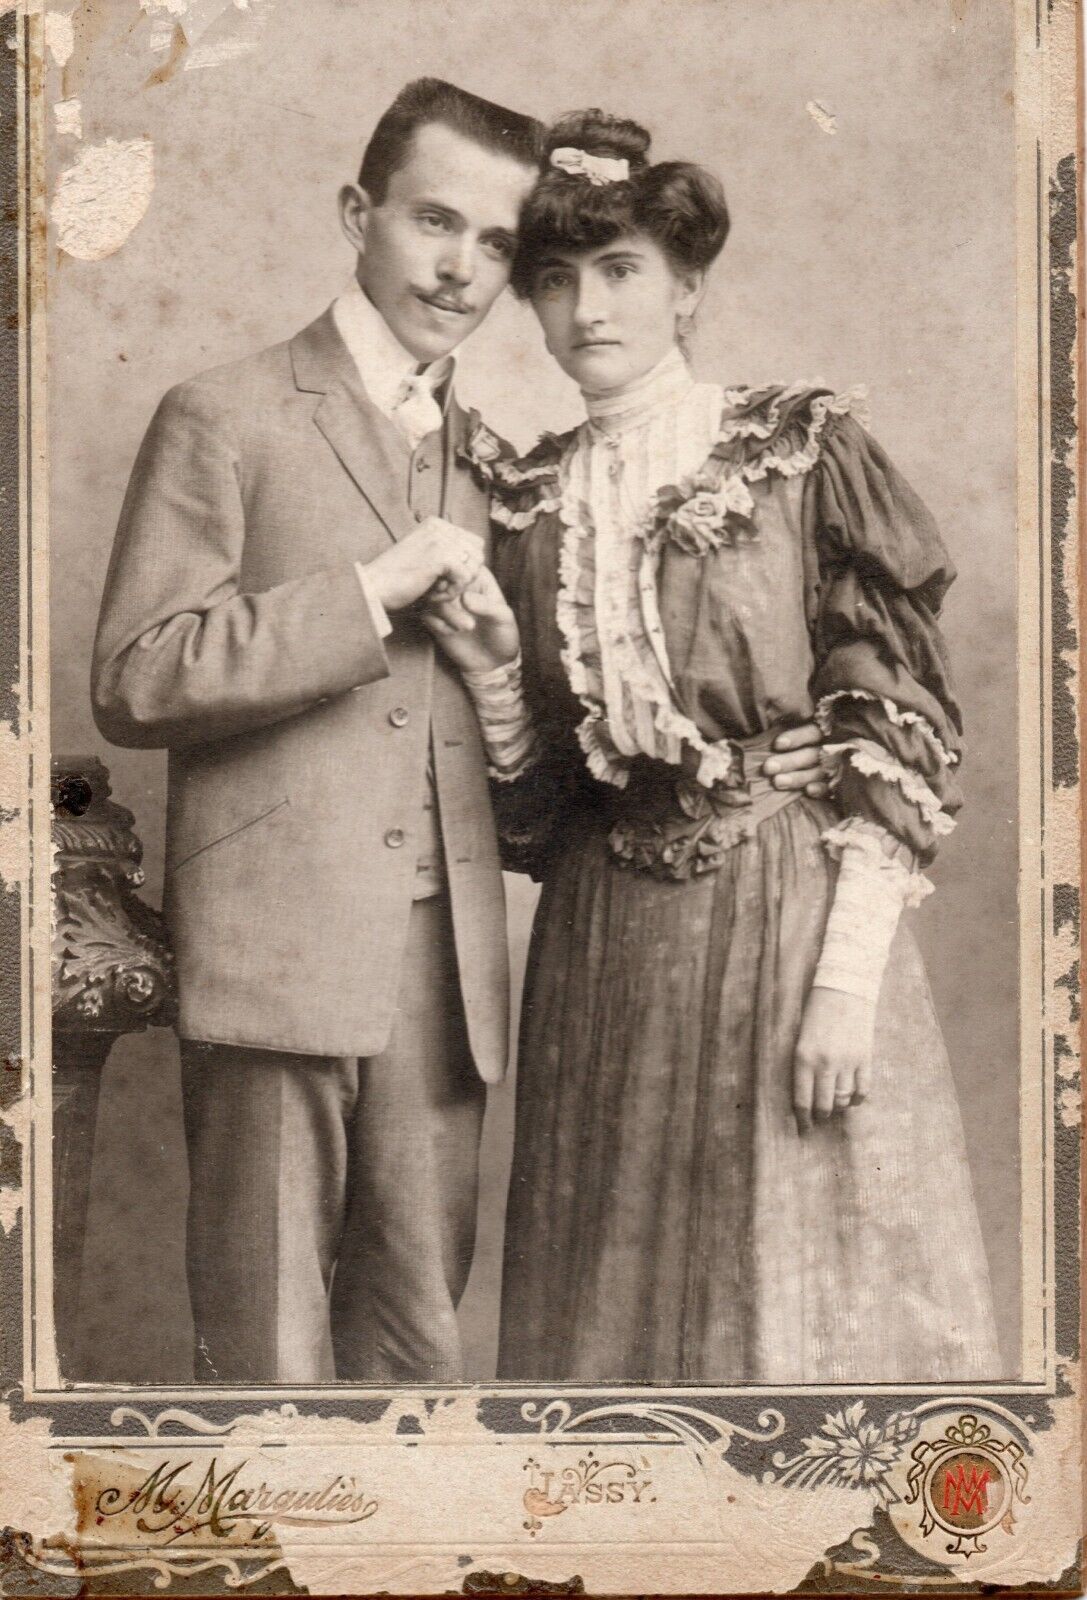 ROMANIA FASHION COUPLE JASSY IASI 1900 CDV PHOTO by M. Margulies